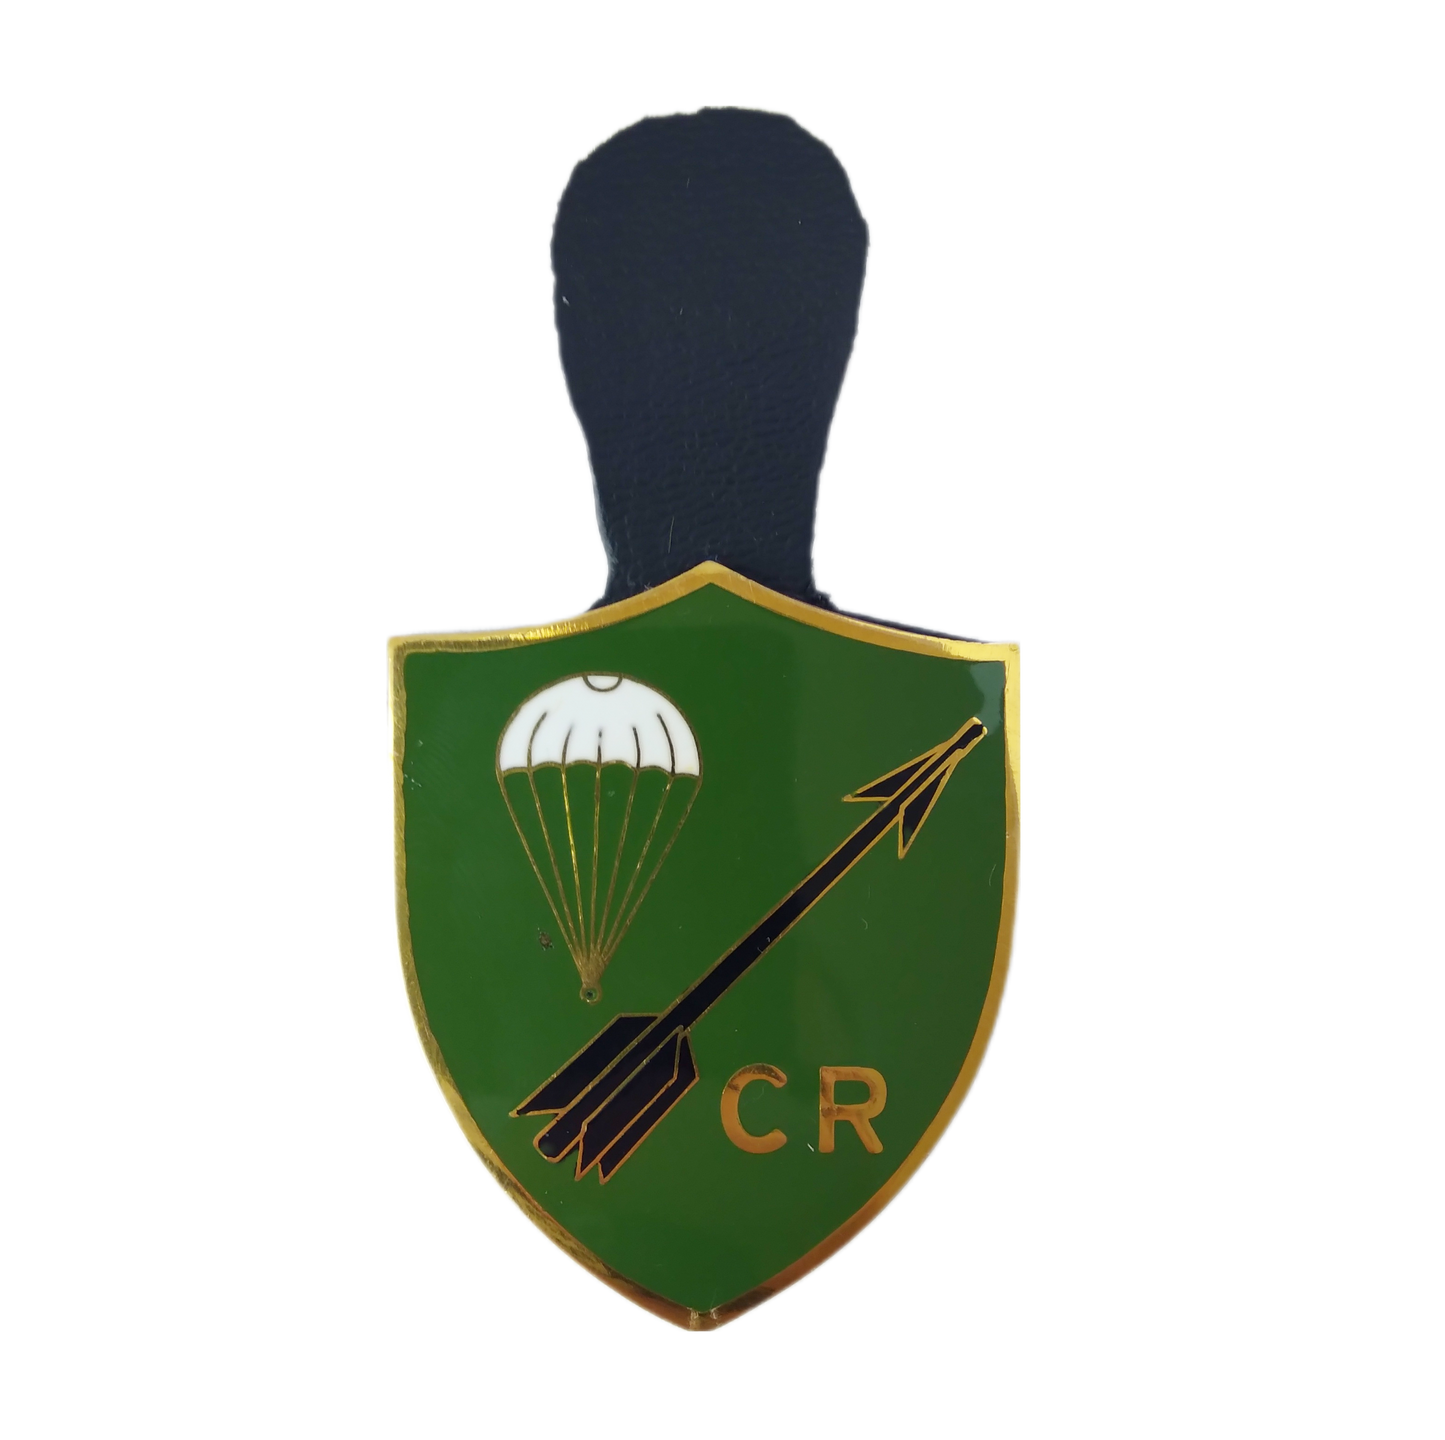 Crachá do Regimento de Caçadores Paraquedistas  - RCP/CR